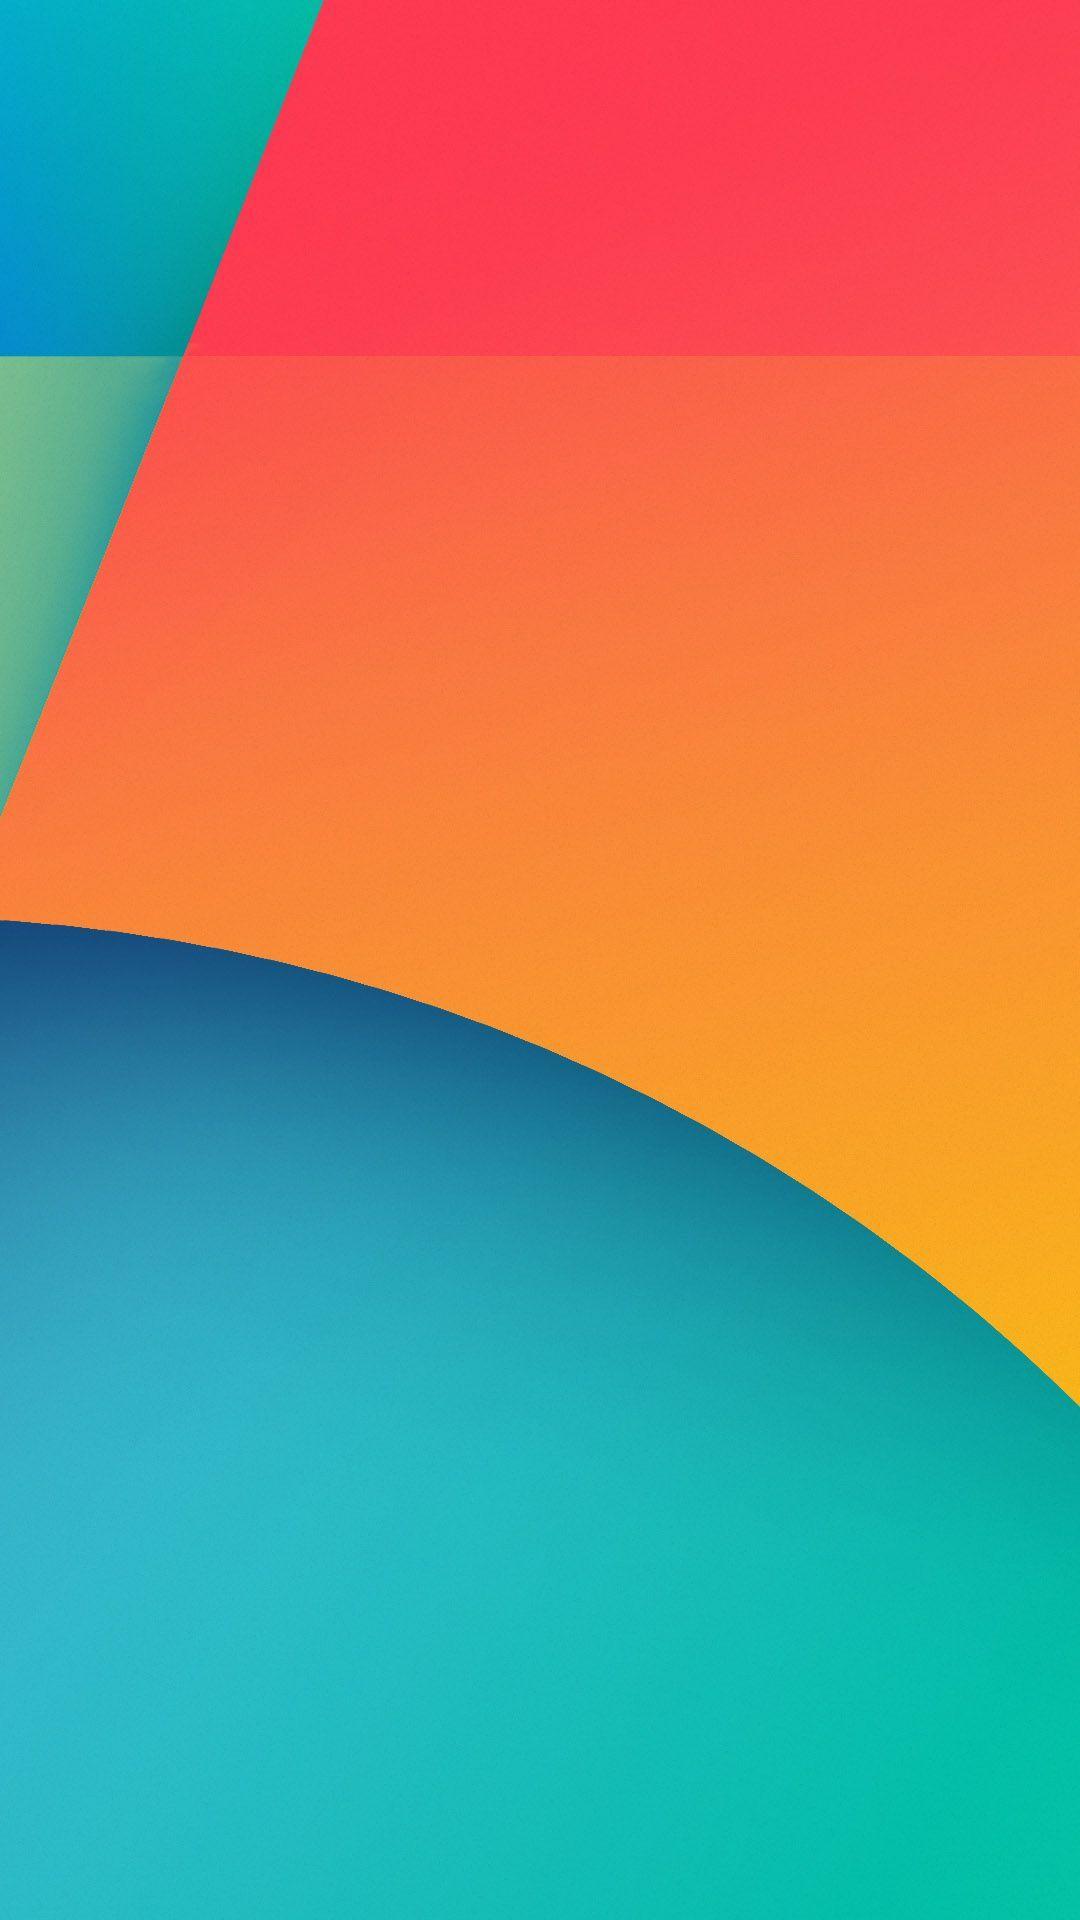 Nexus 5 Android 4.4 KitKat Orange Blue Android Wallpaper